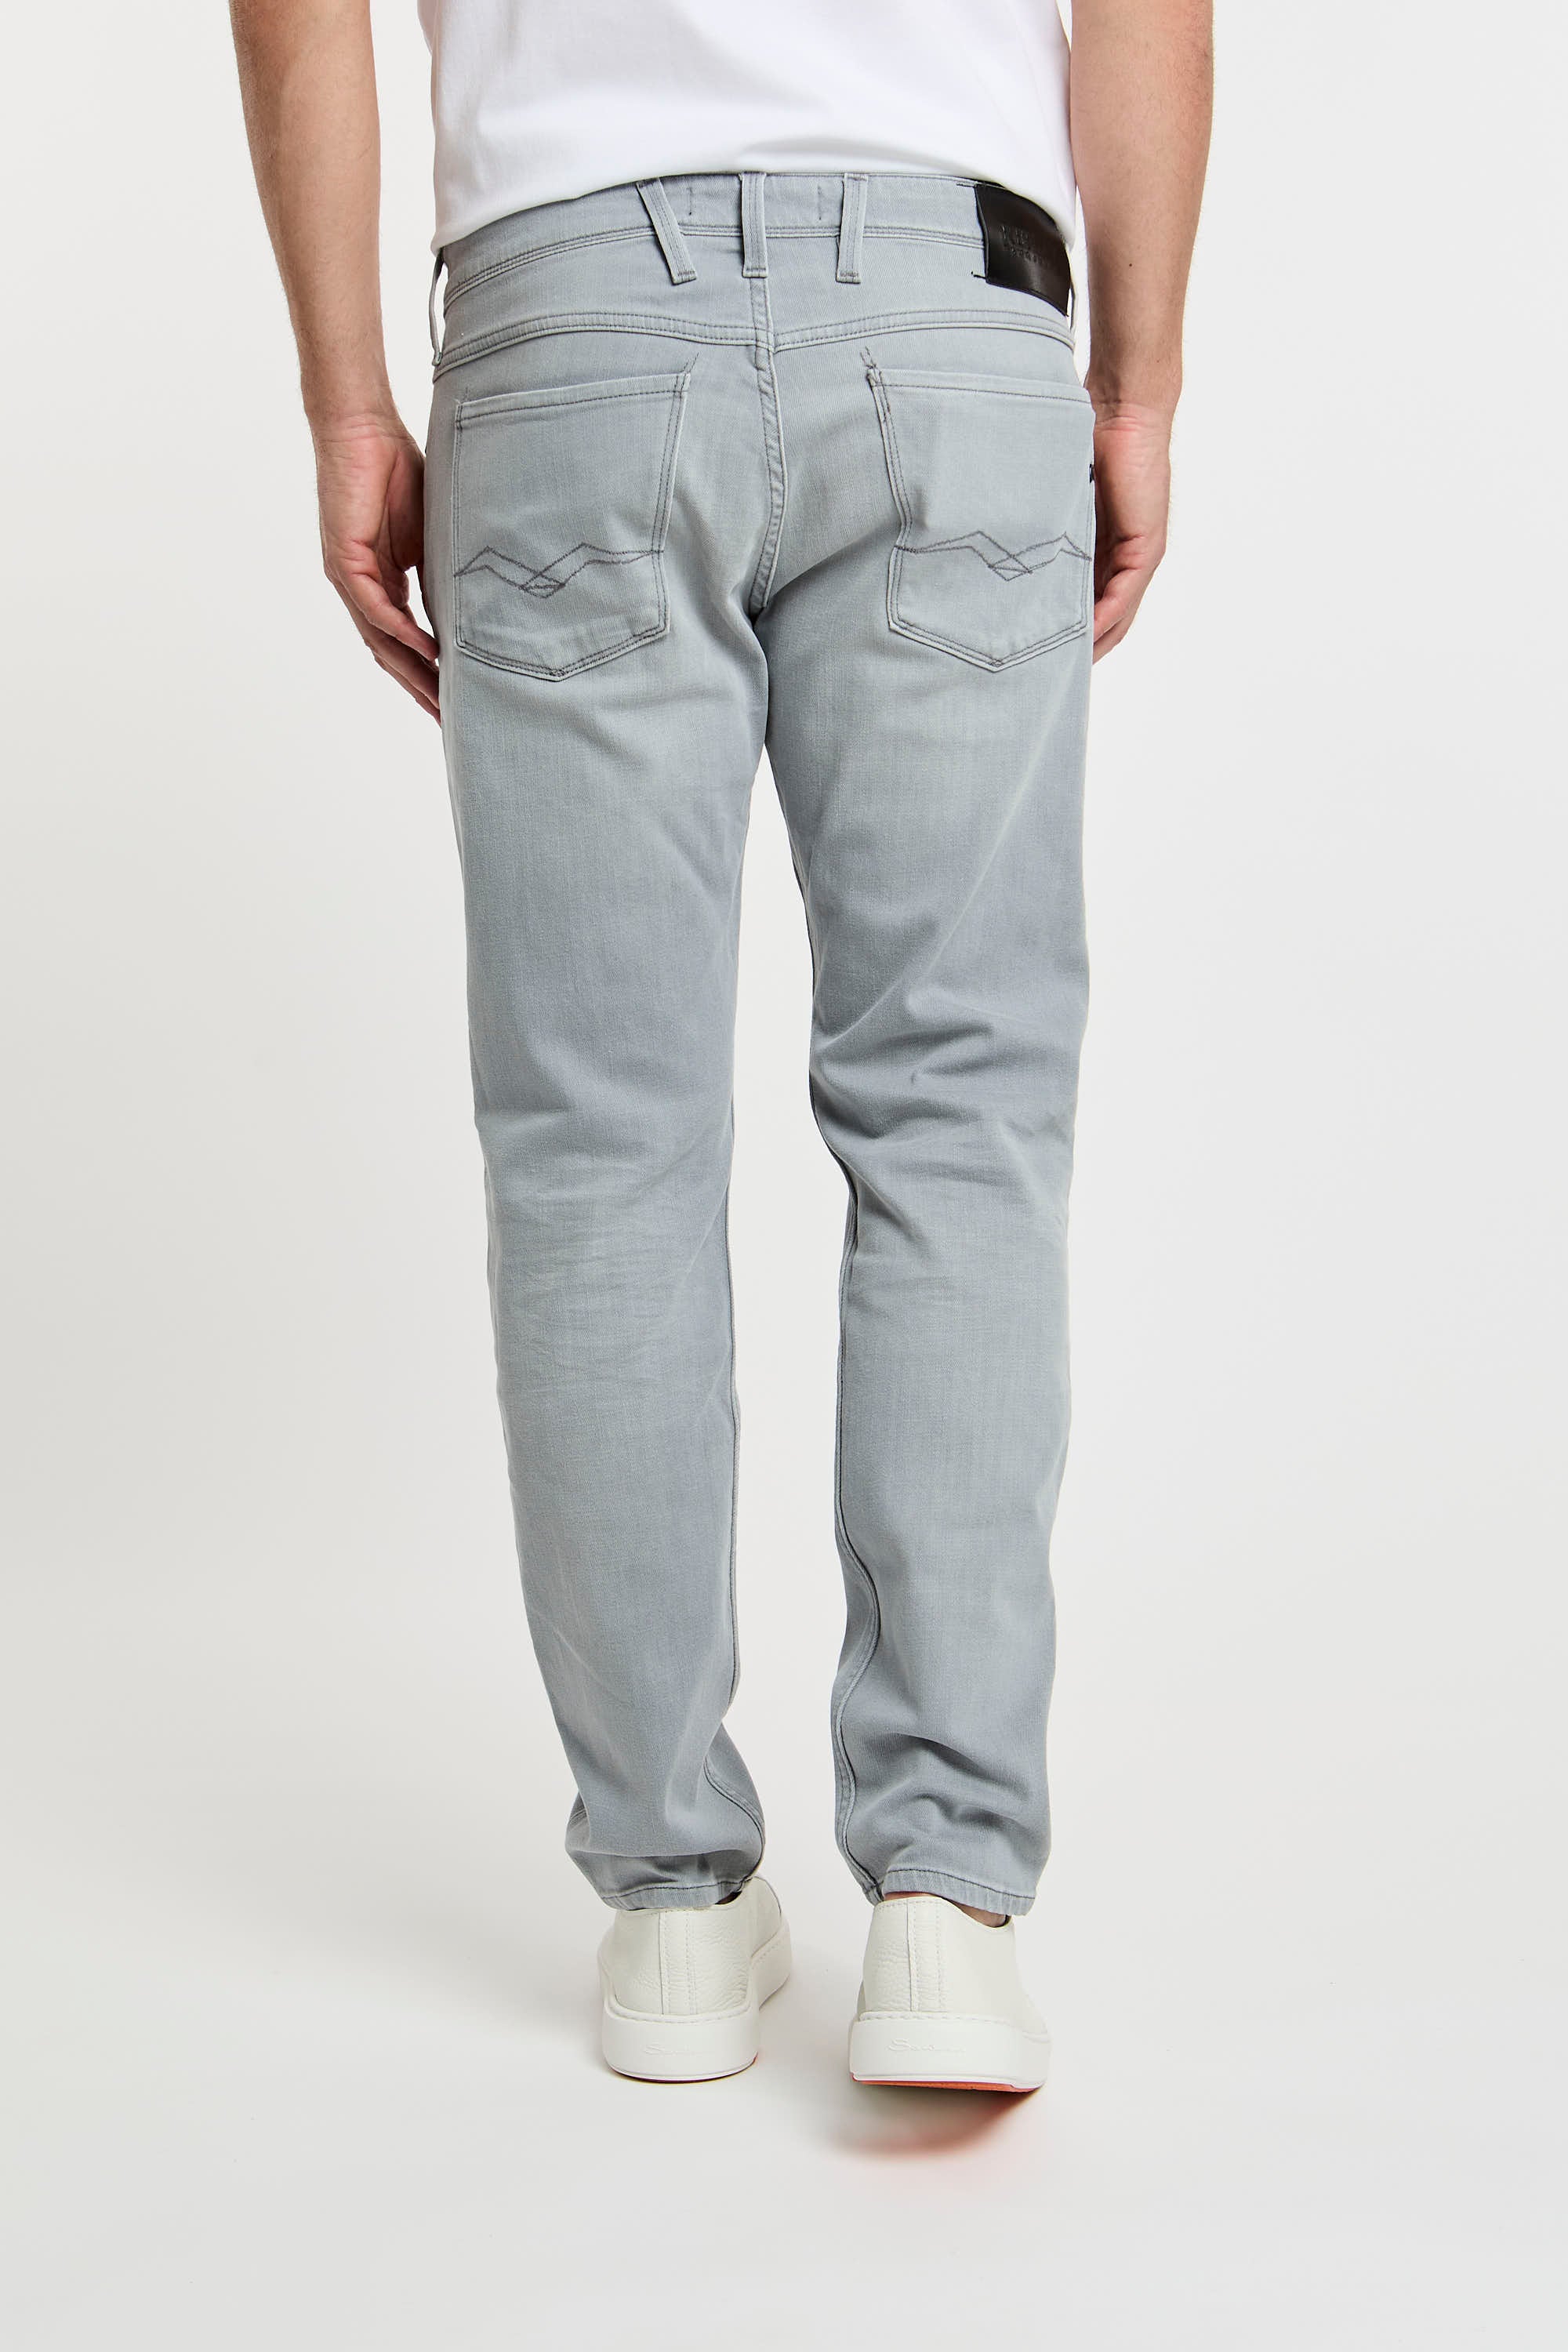 Replay Slim Fit Jeans Anbass Cotton/Elastane Light Grey-4